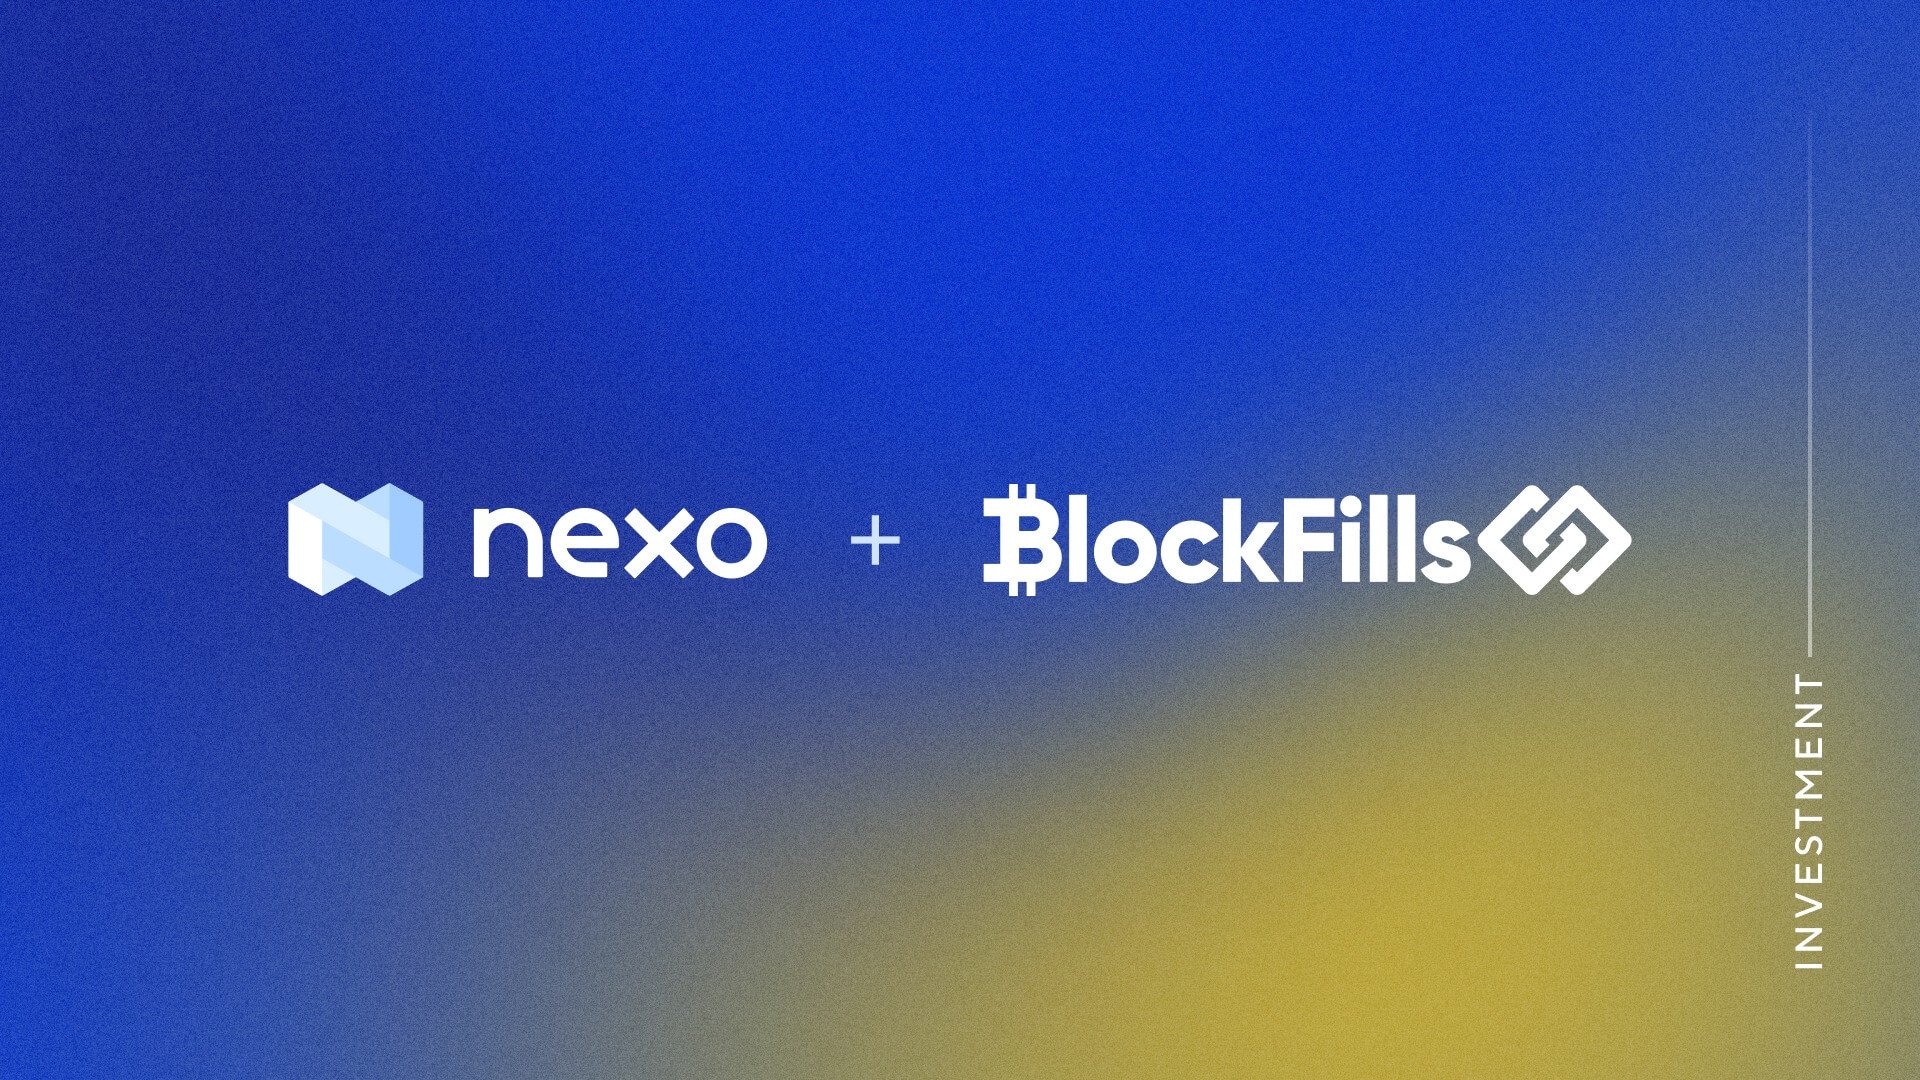 Nexo Expands Prime Brokerage Capabilities & Services for Crypto Miners to BlockFills via Strategic Partnership